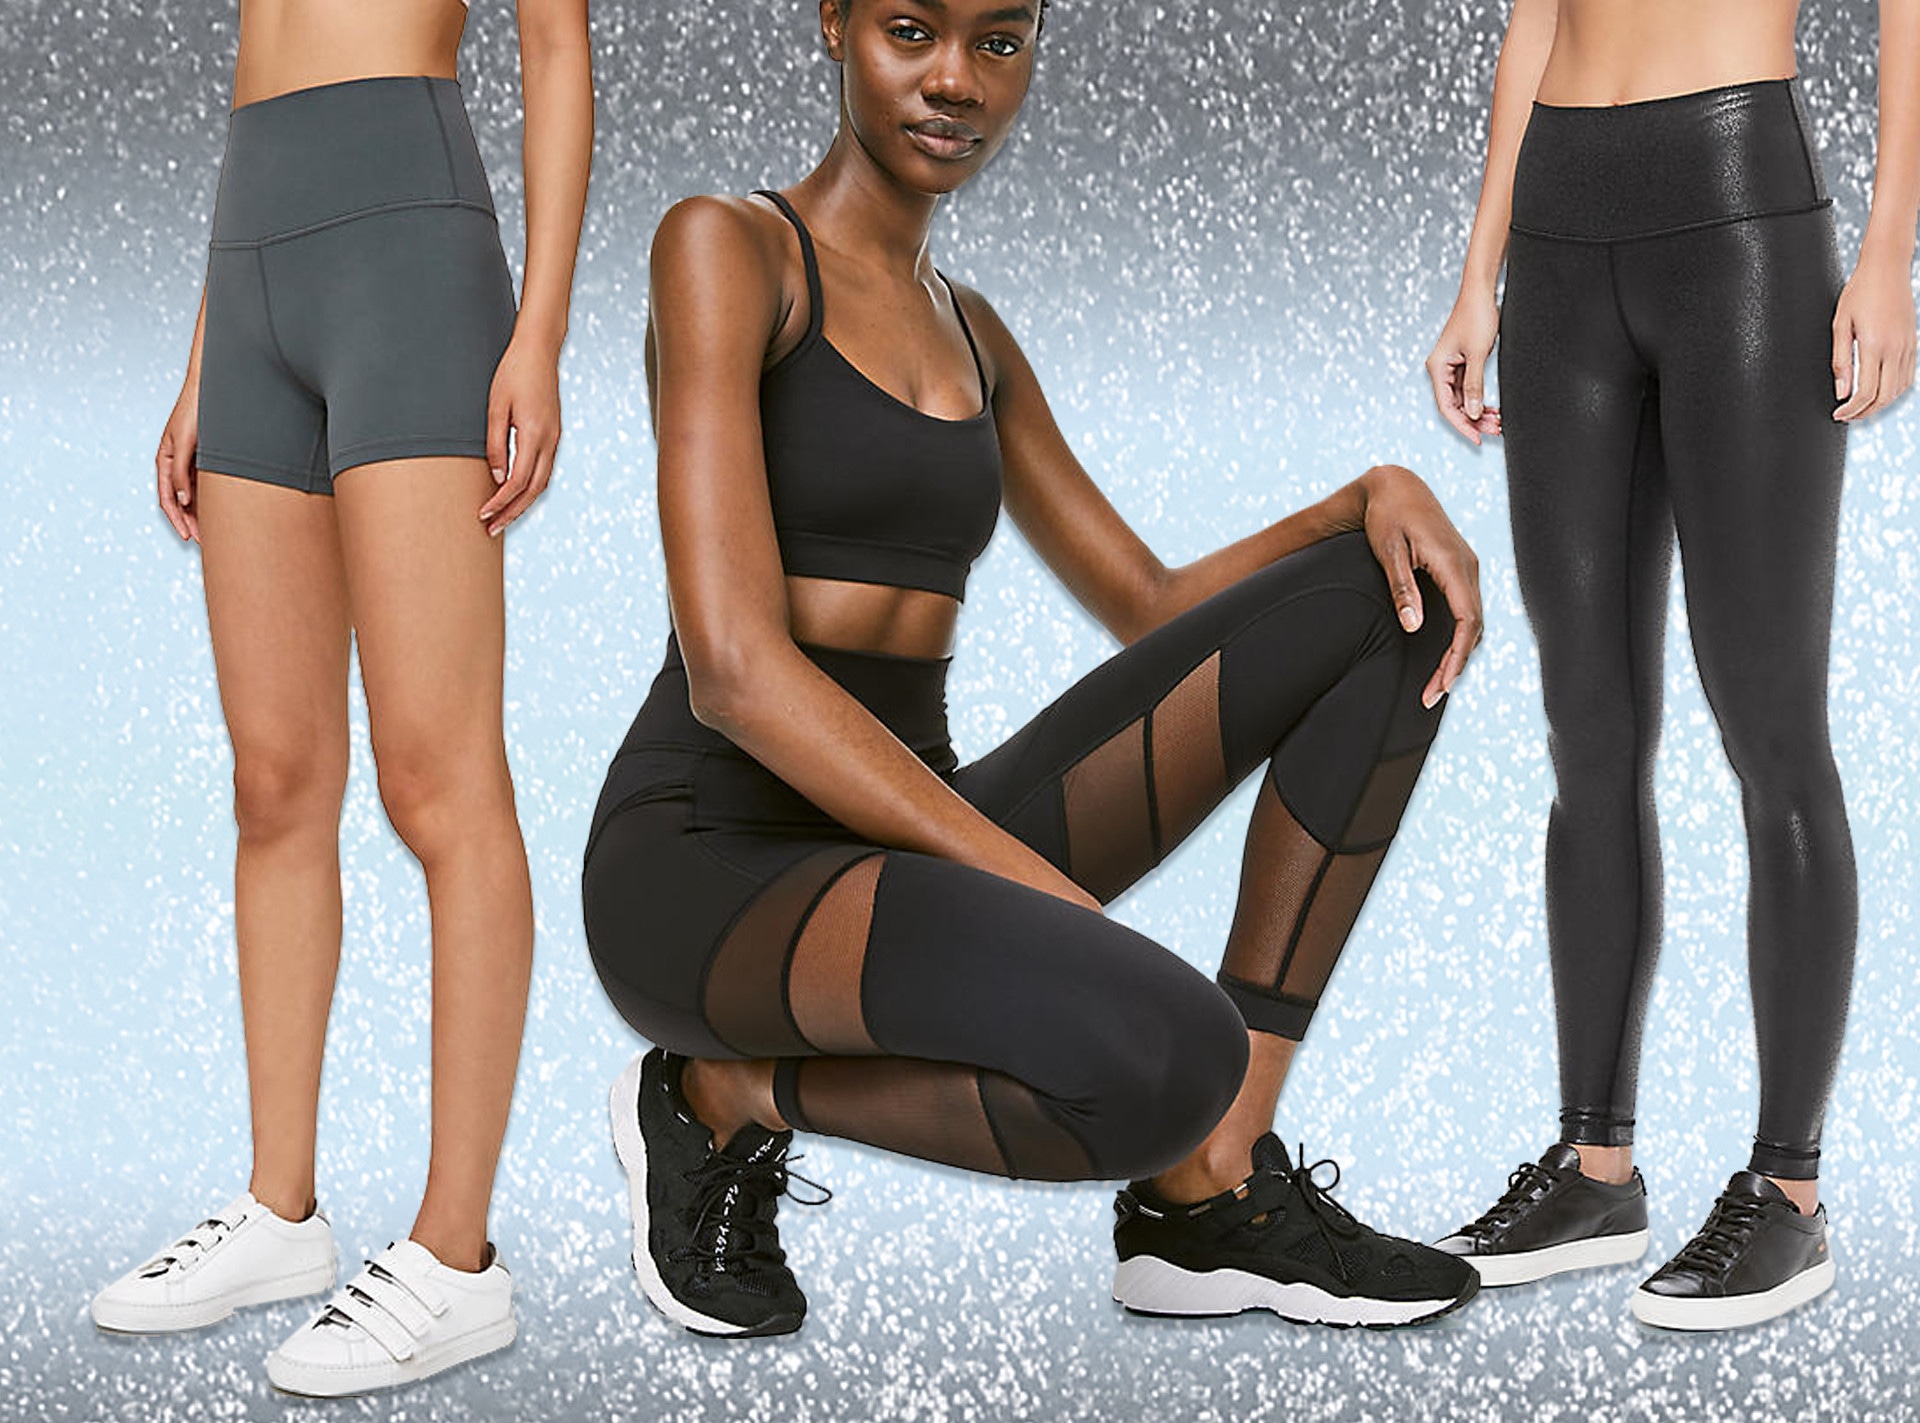 Lululemon Leggings, Yoga Pants & Shorts We're Obsessed With - E! Online